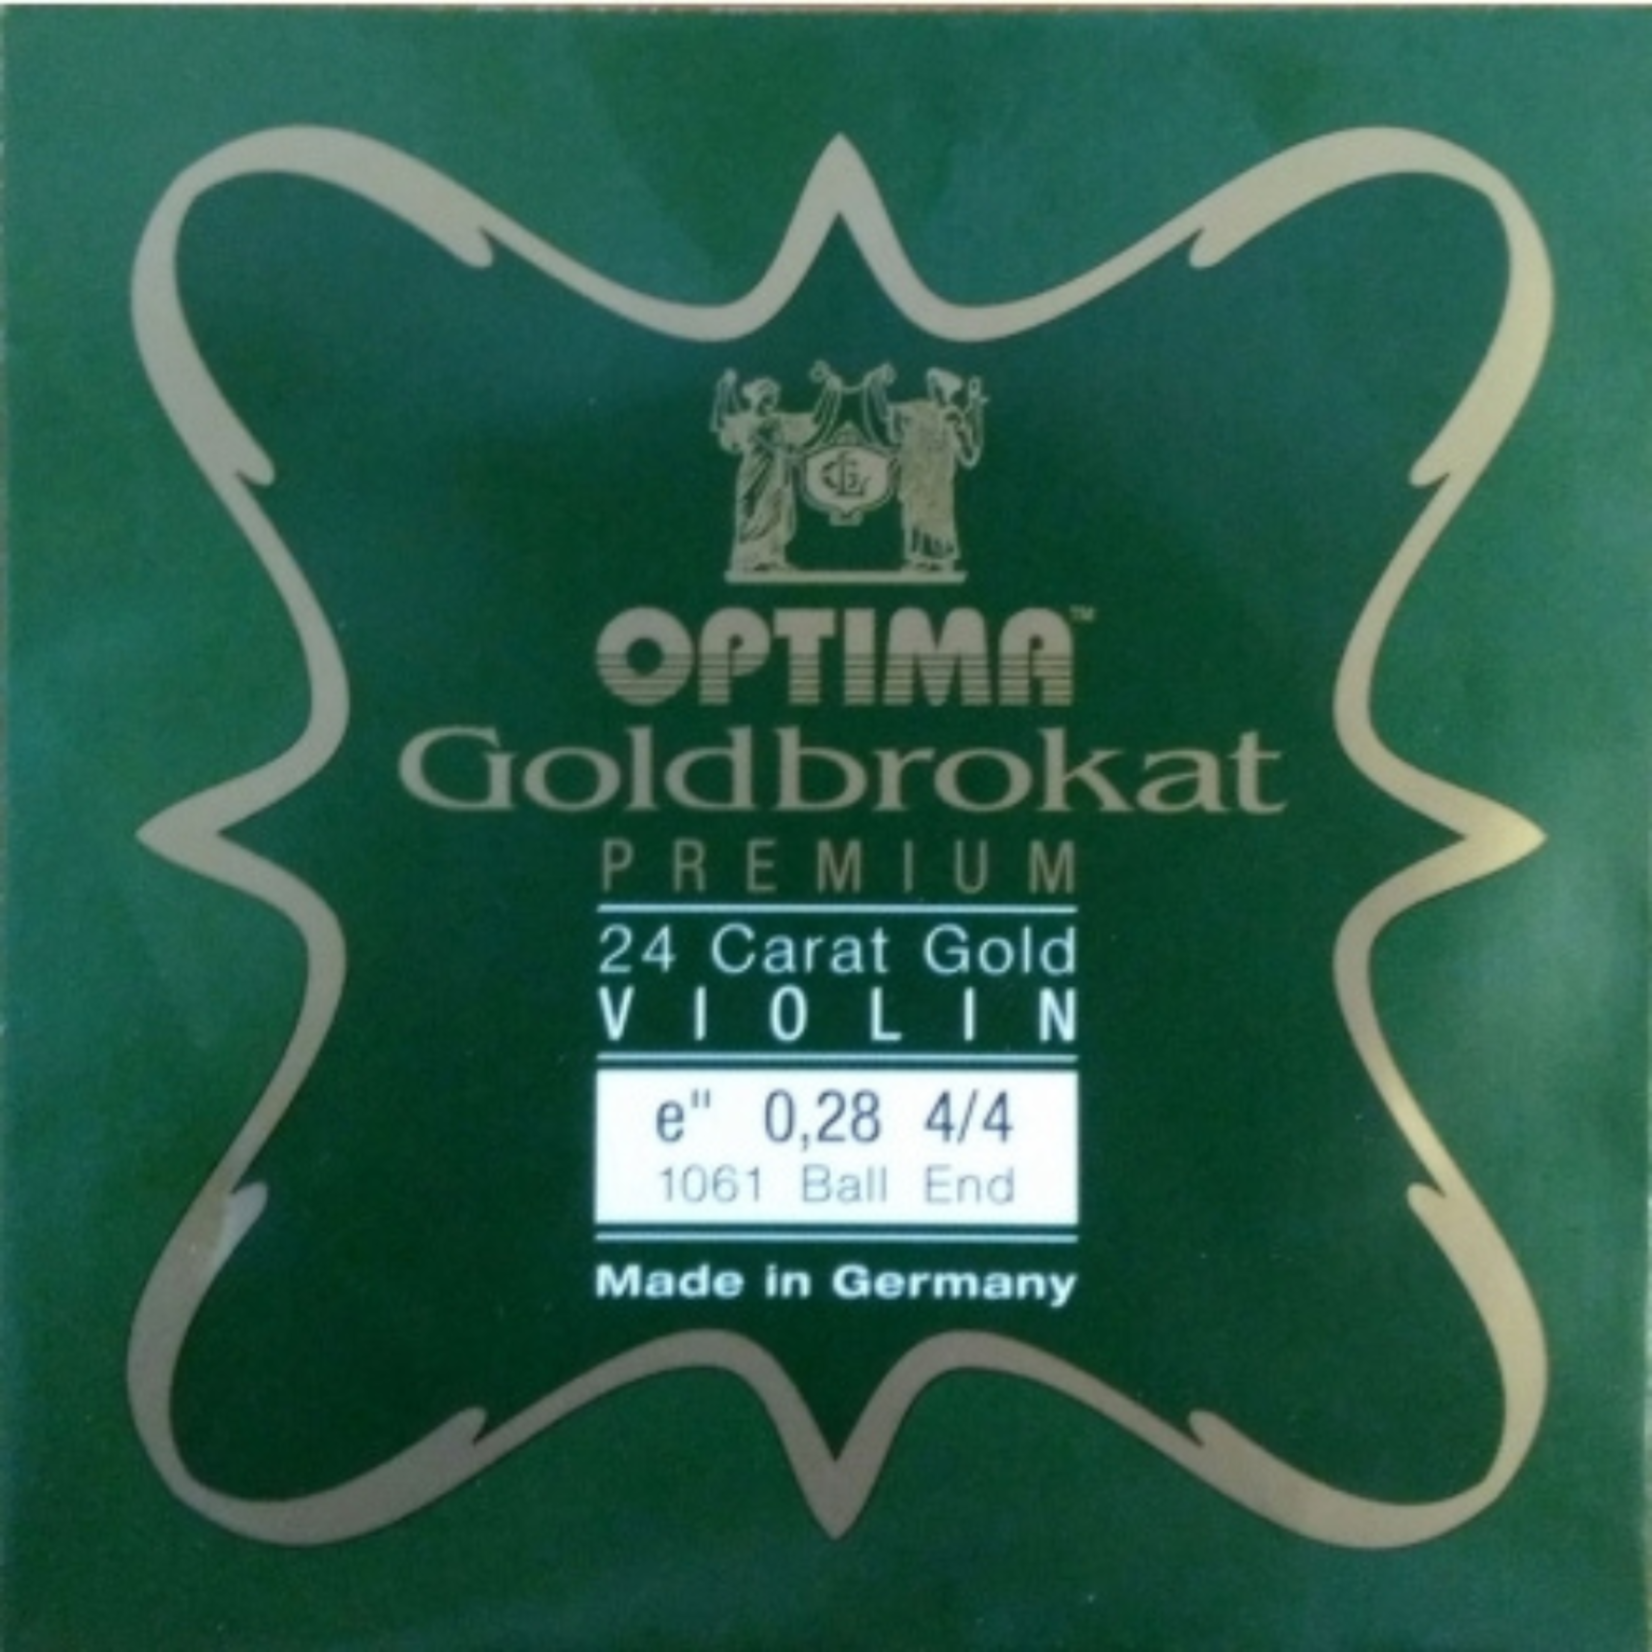 OPTIMA Goldbrokat Premium 24K GOLD , 4/4, mi-snaar (e1), ball end, 0,26, medium